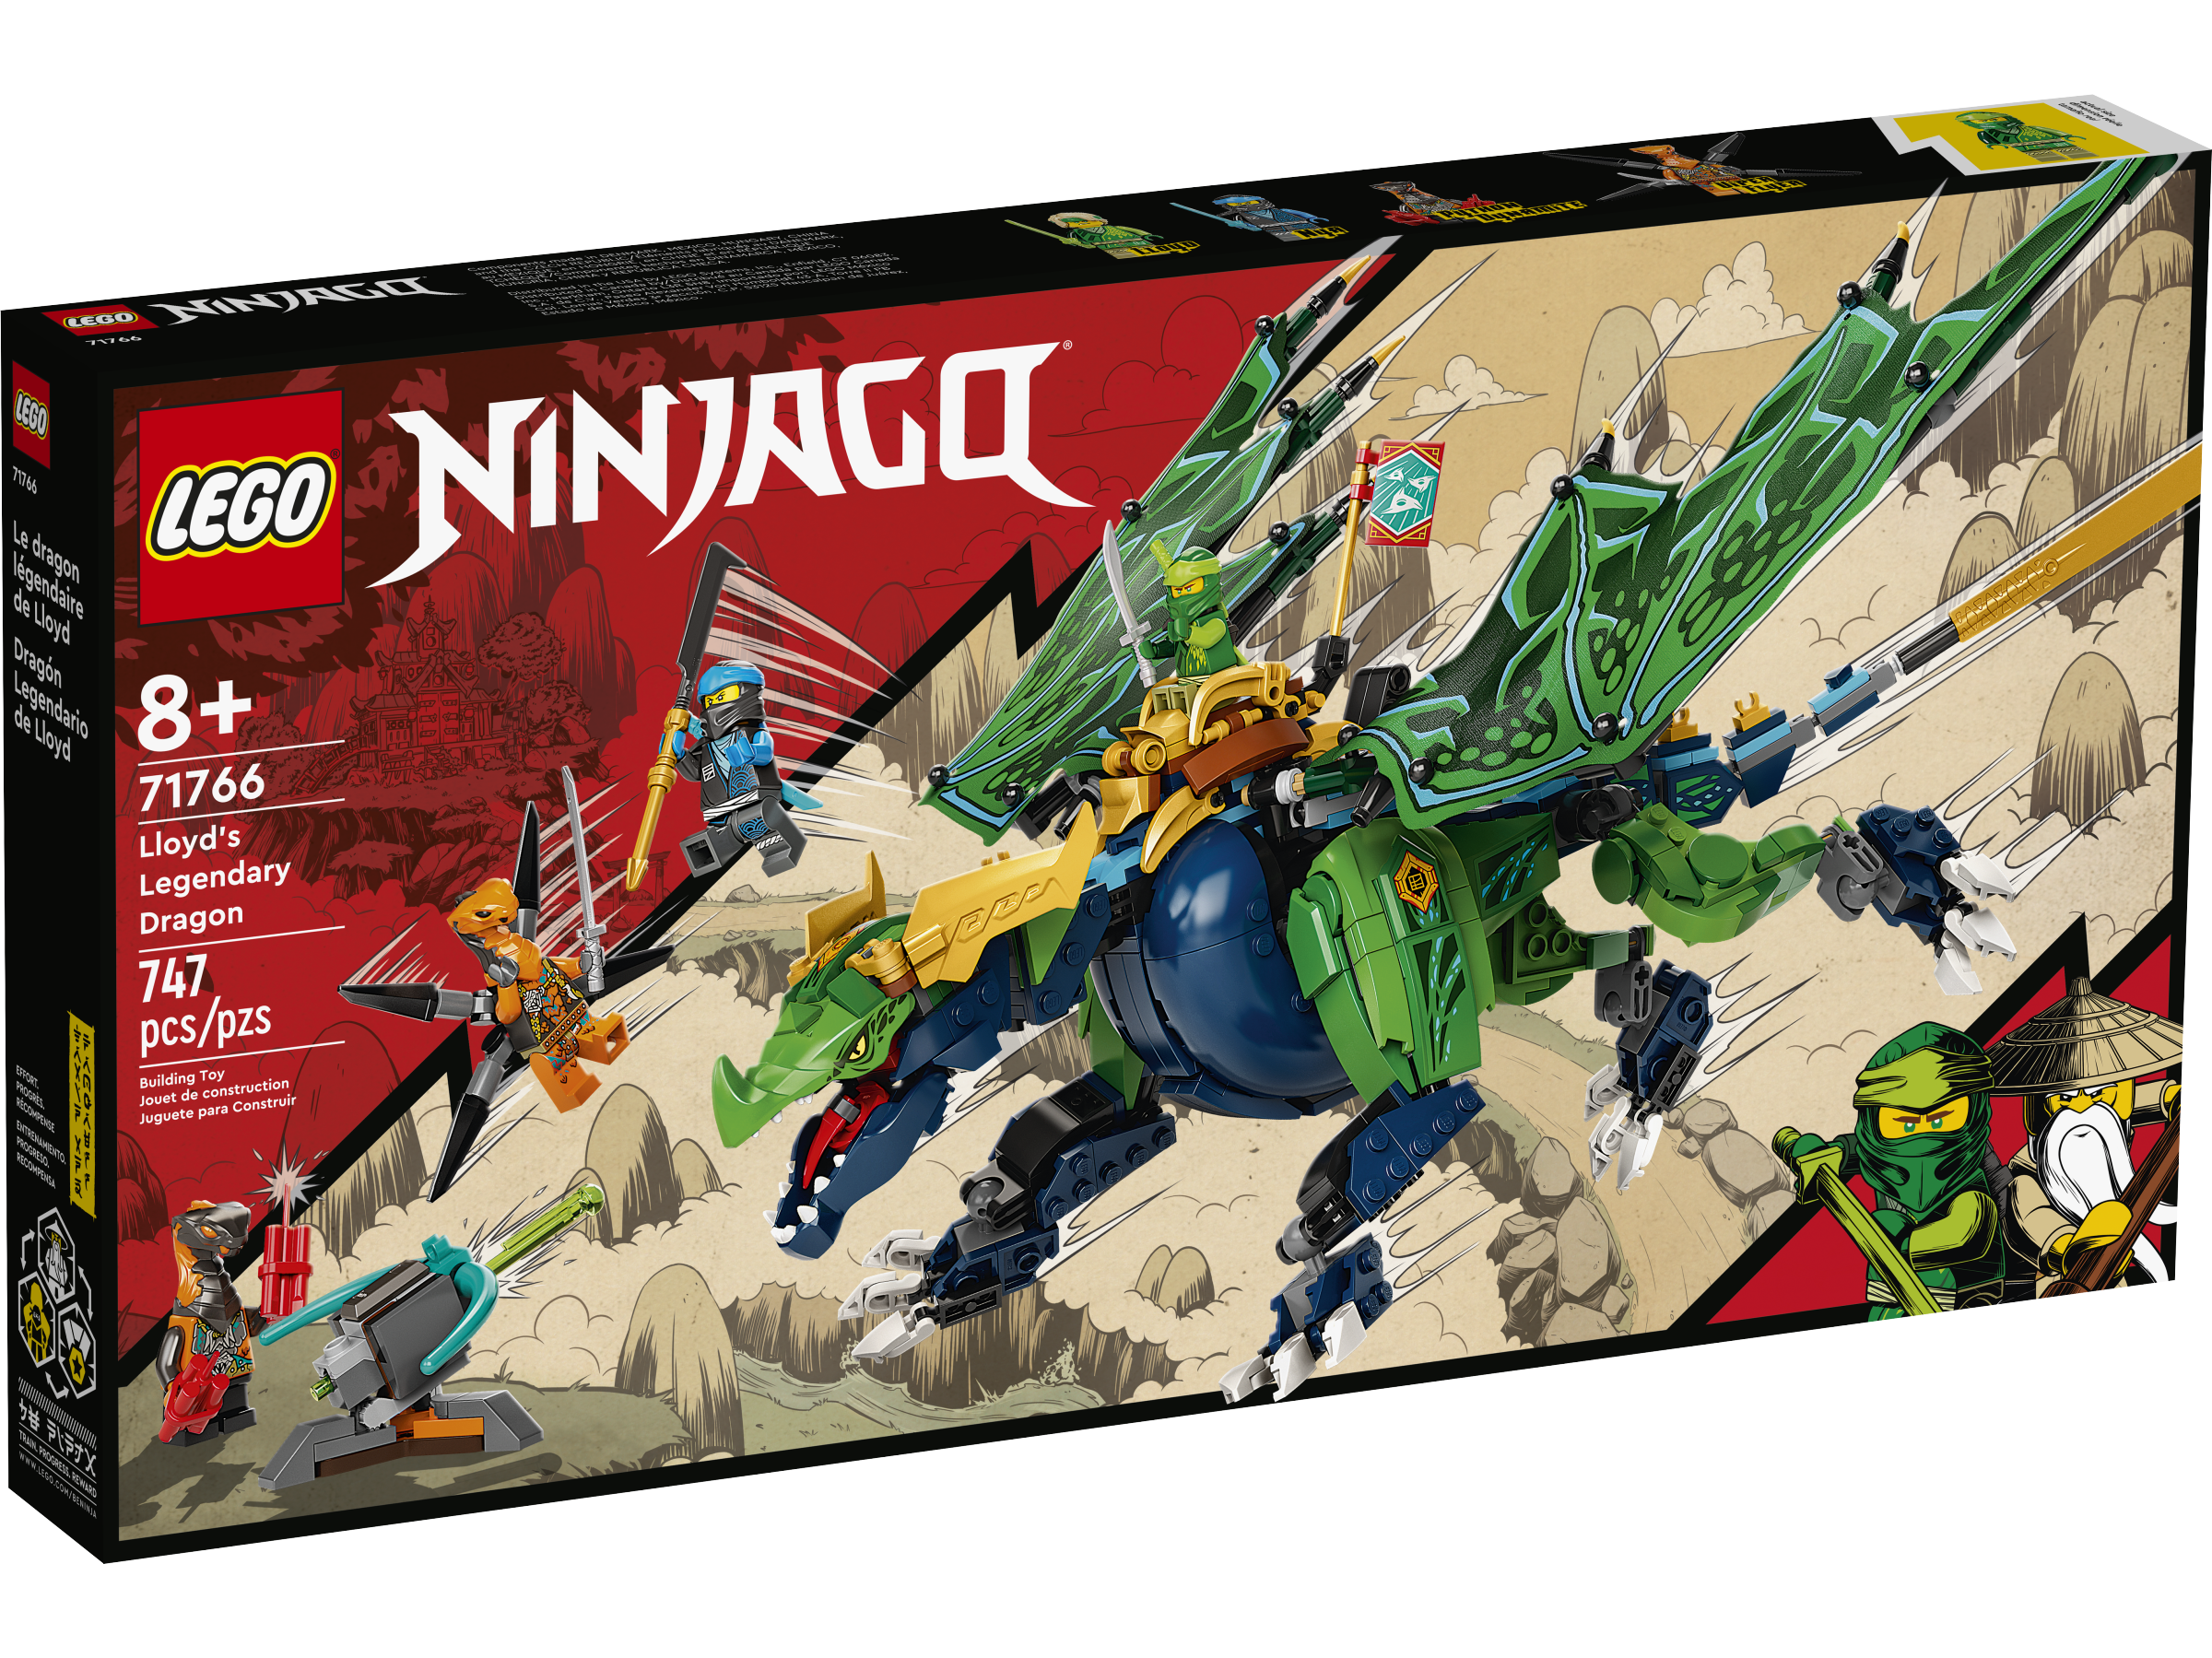 Lego 71766 Ninjago Lloyd's Legendary Dragon